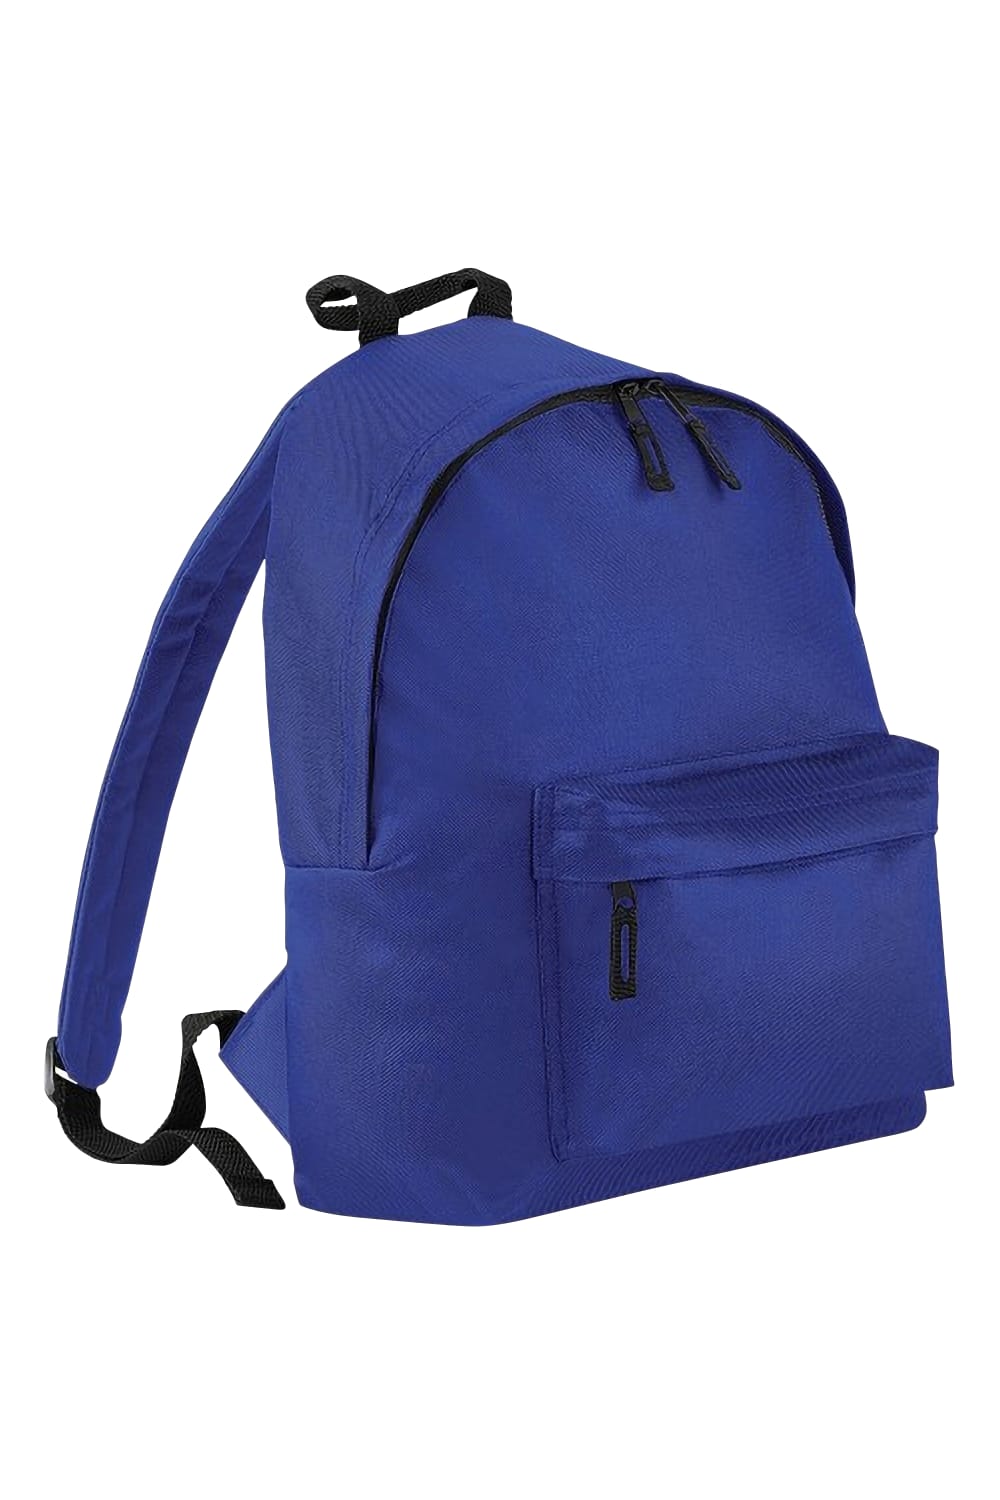 Junior Fashion Backpack / Rucksack (14 Liters) (Pack of 2) (Bright Royal)